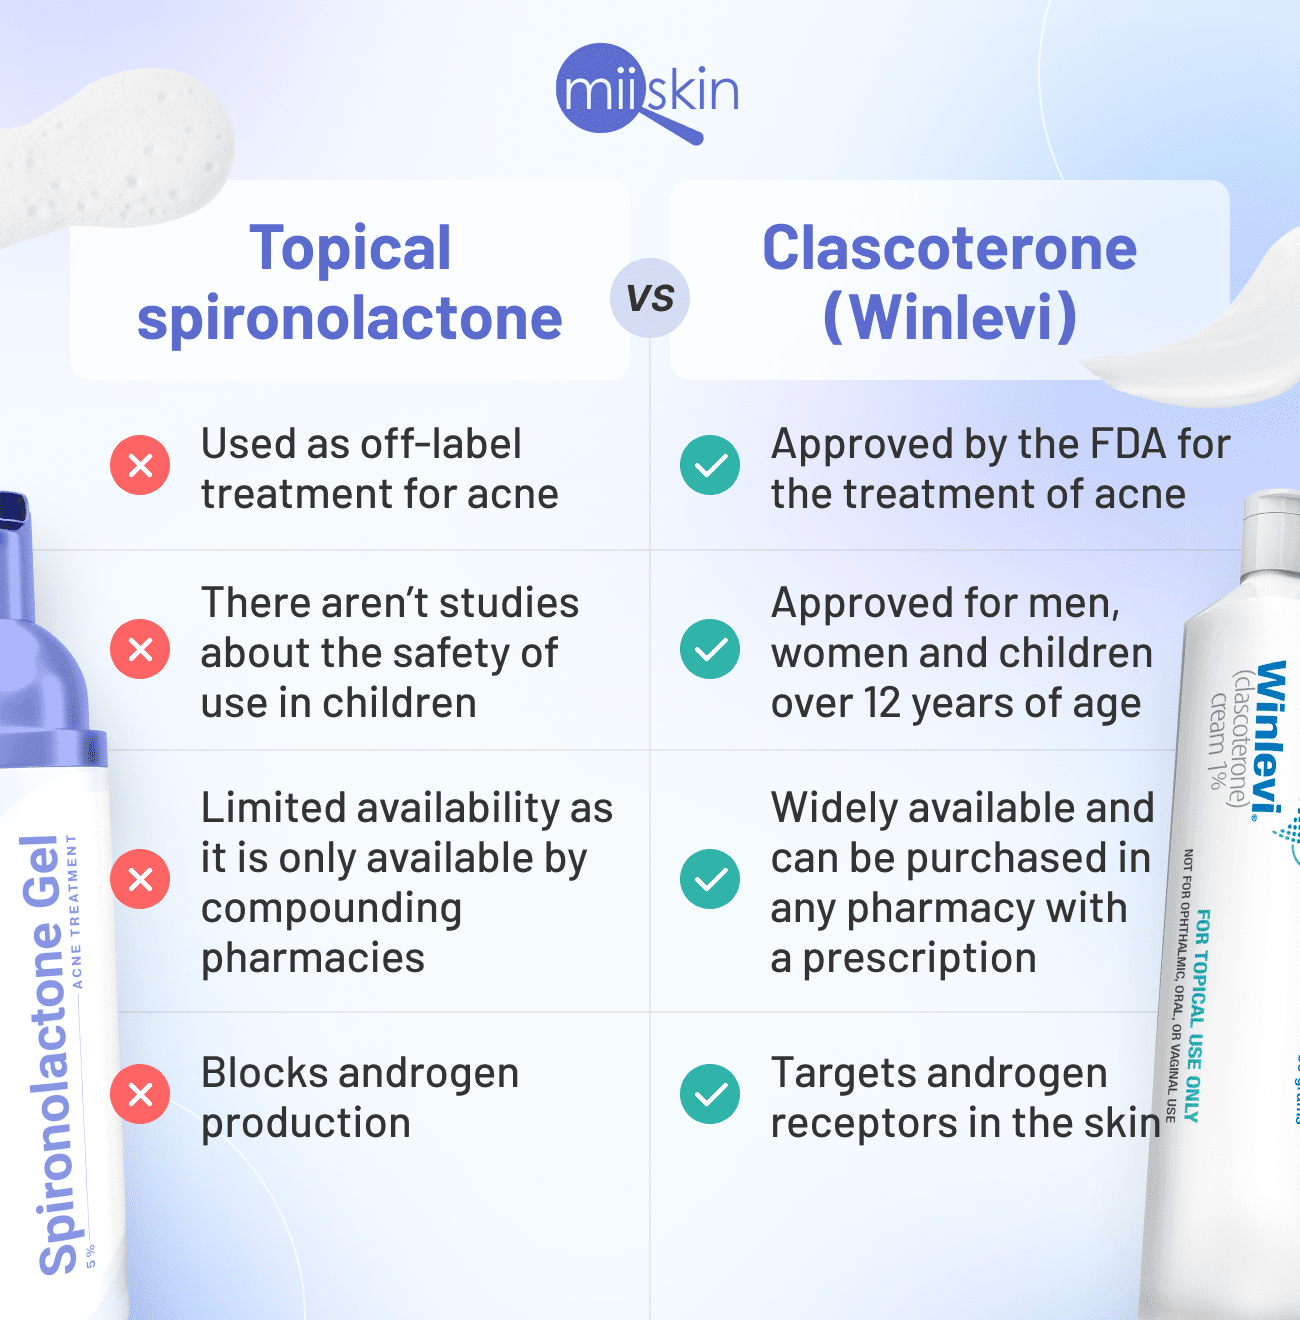 winlevi(clascoterone) vs topical spironolactone